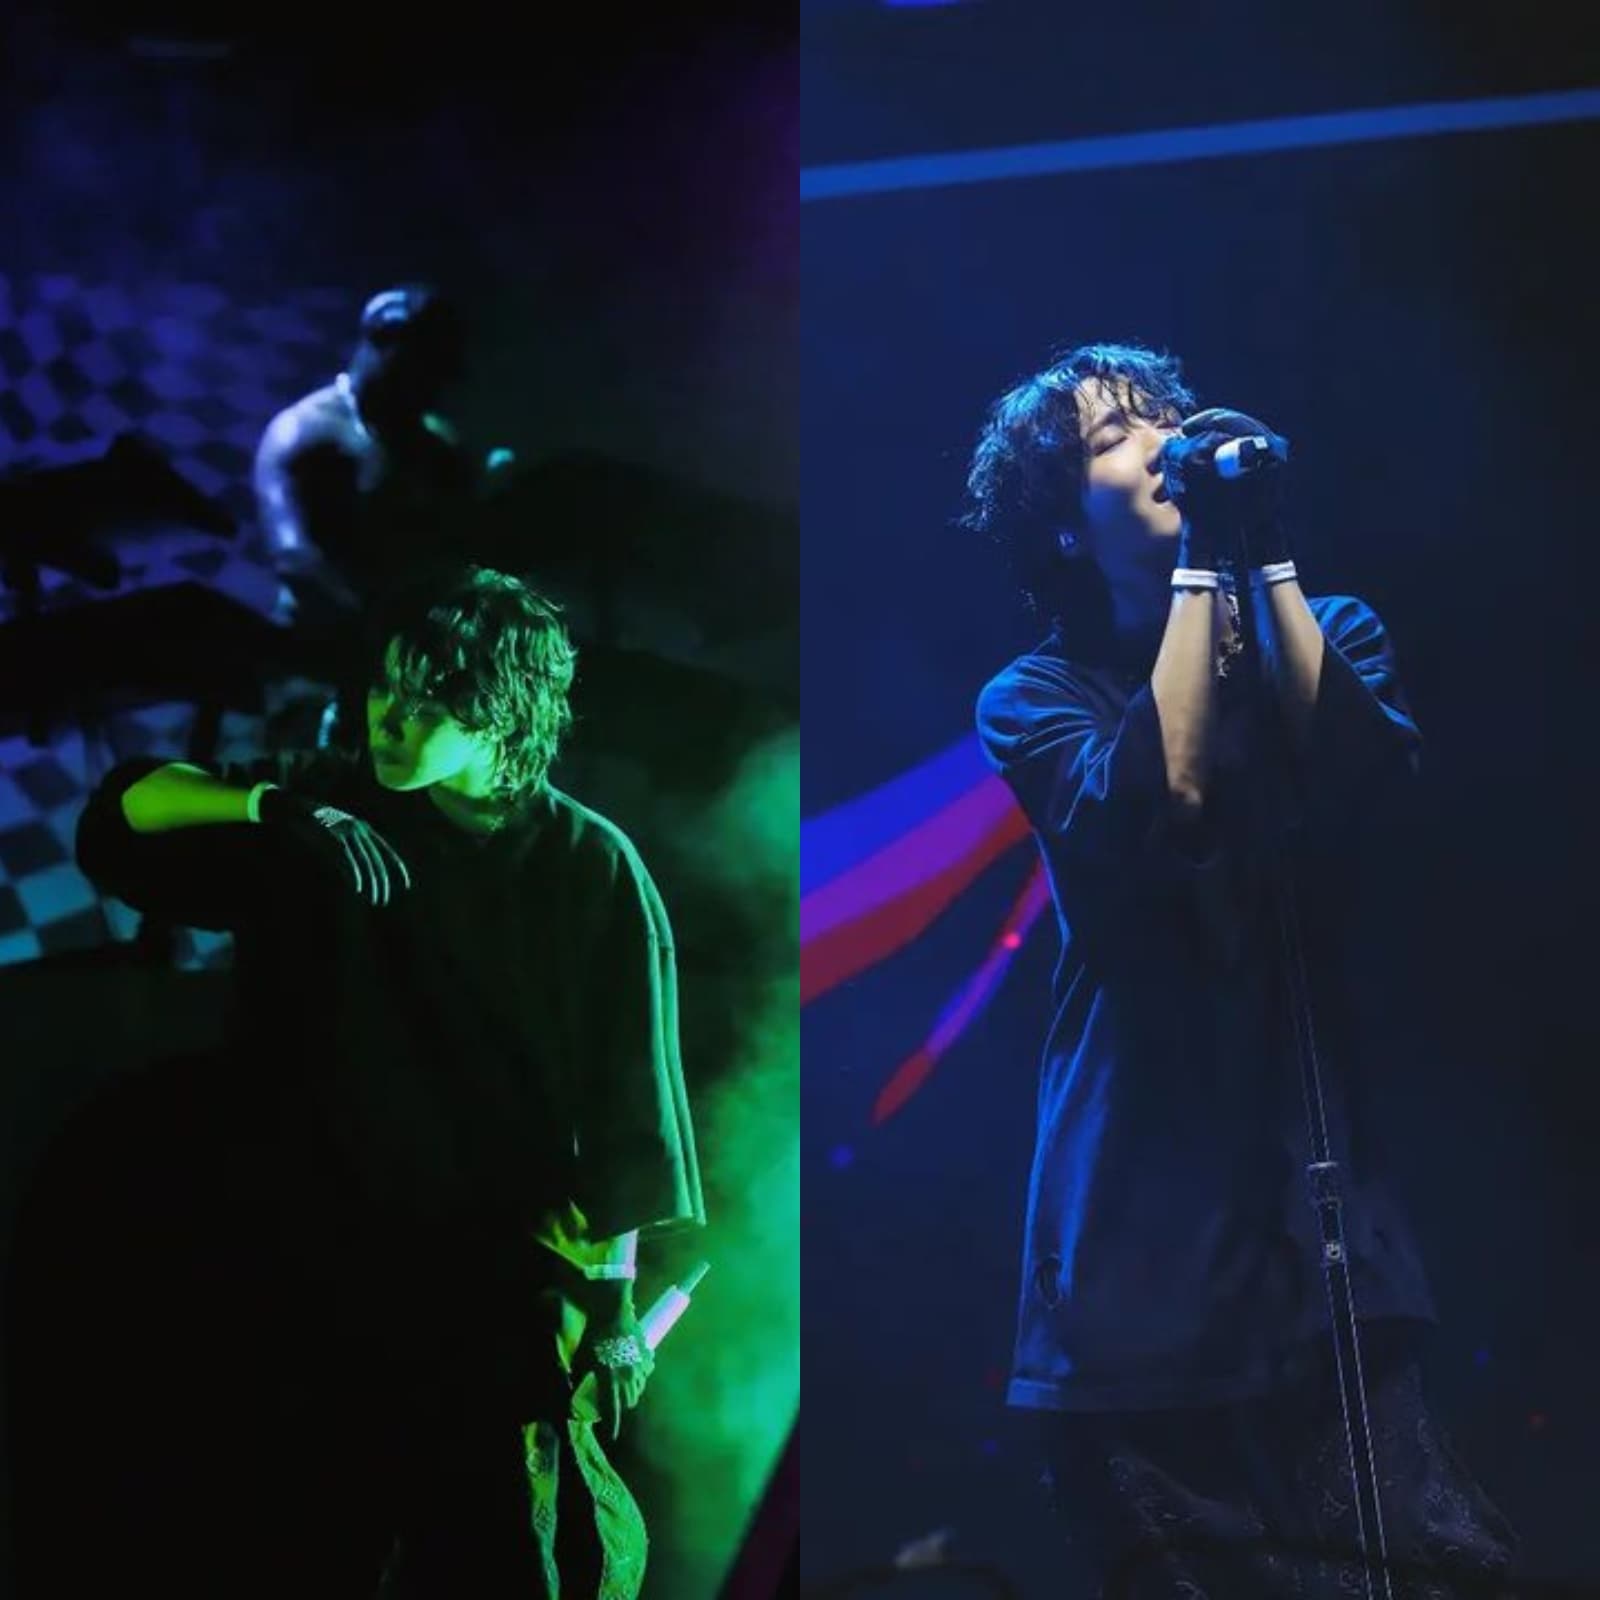 j-hope - Live at Lollapalooza 2022 (Full Performance) 